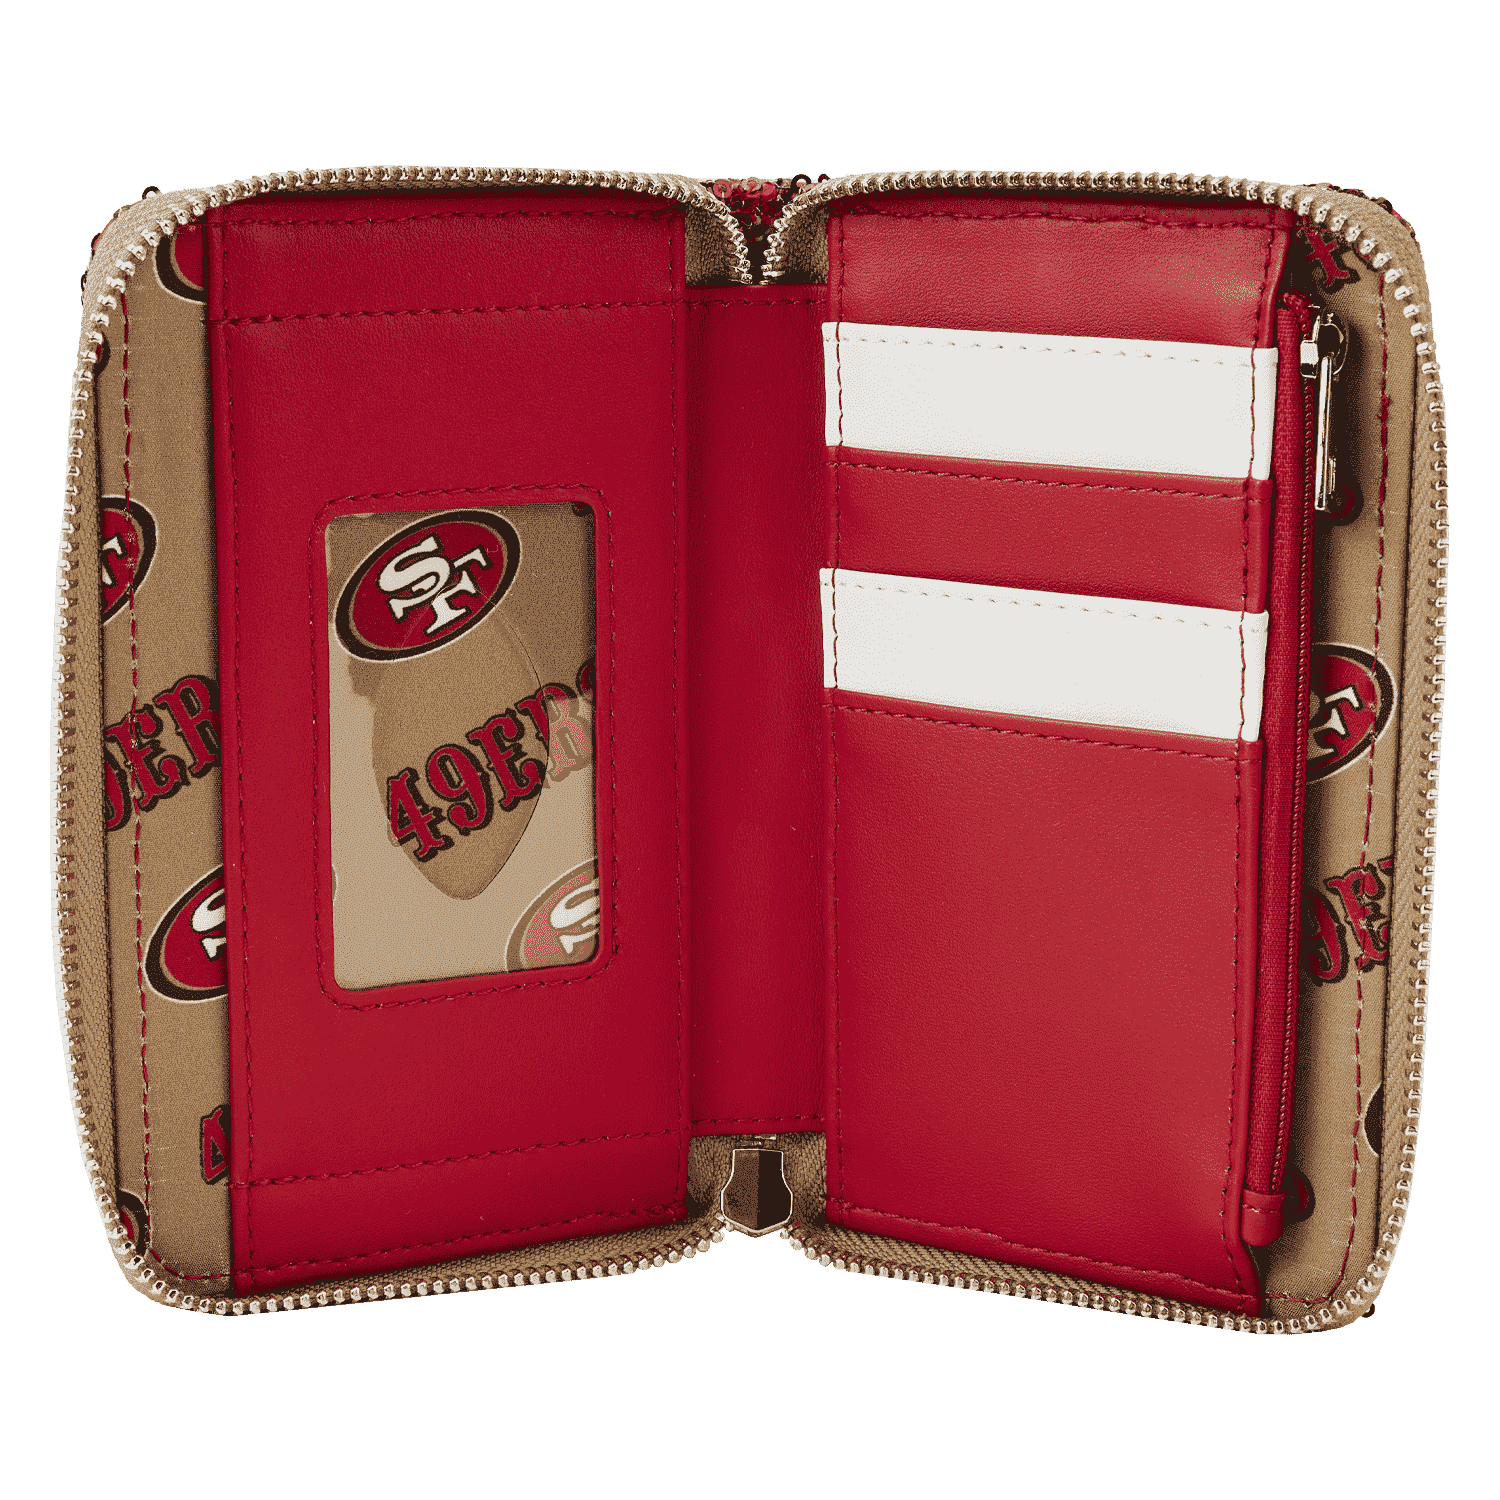 Buy NFL San Francisco 49ers Sequin Zip Around Wallet at Loungefly.